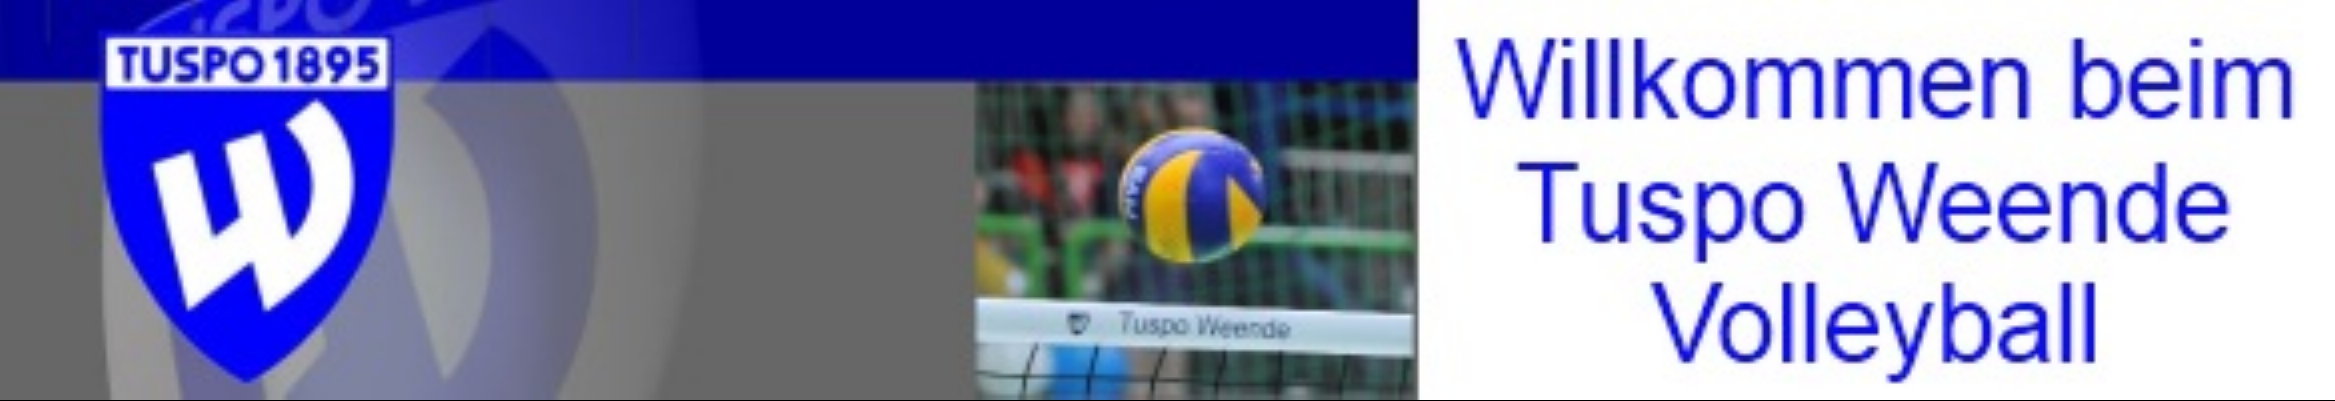 Tuspo Weende Volleyball